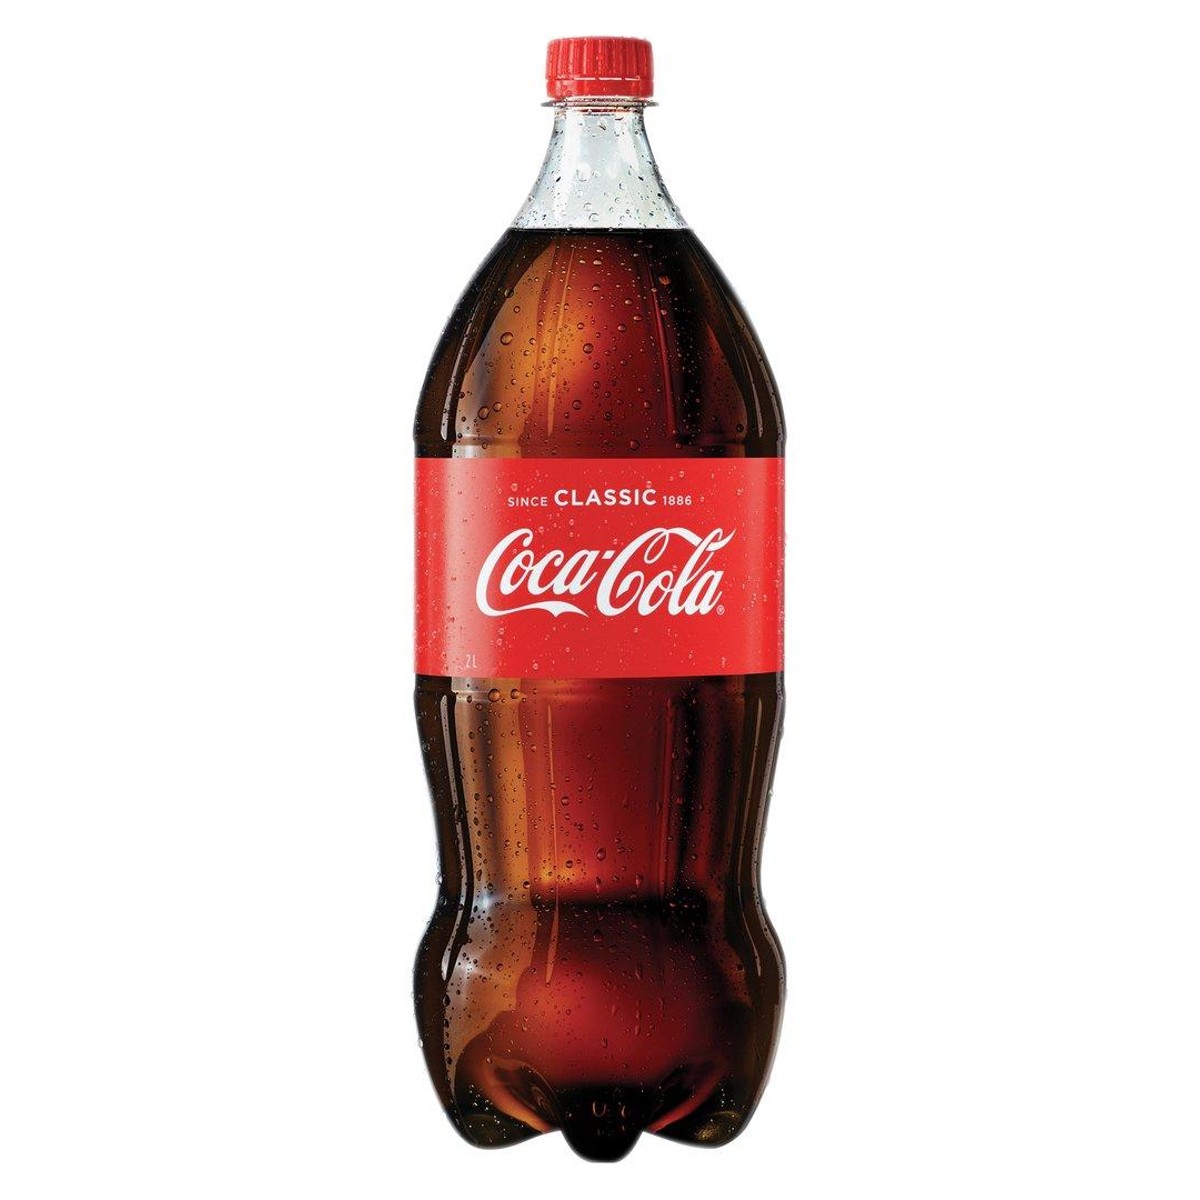 Coca-Cola Coke Mini Bottles 8pk. - 300ml – Giant Tiger